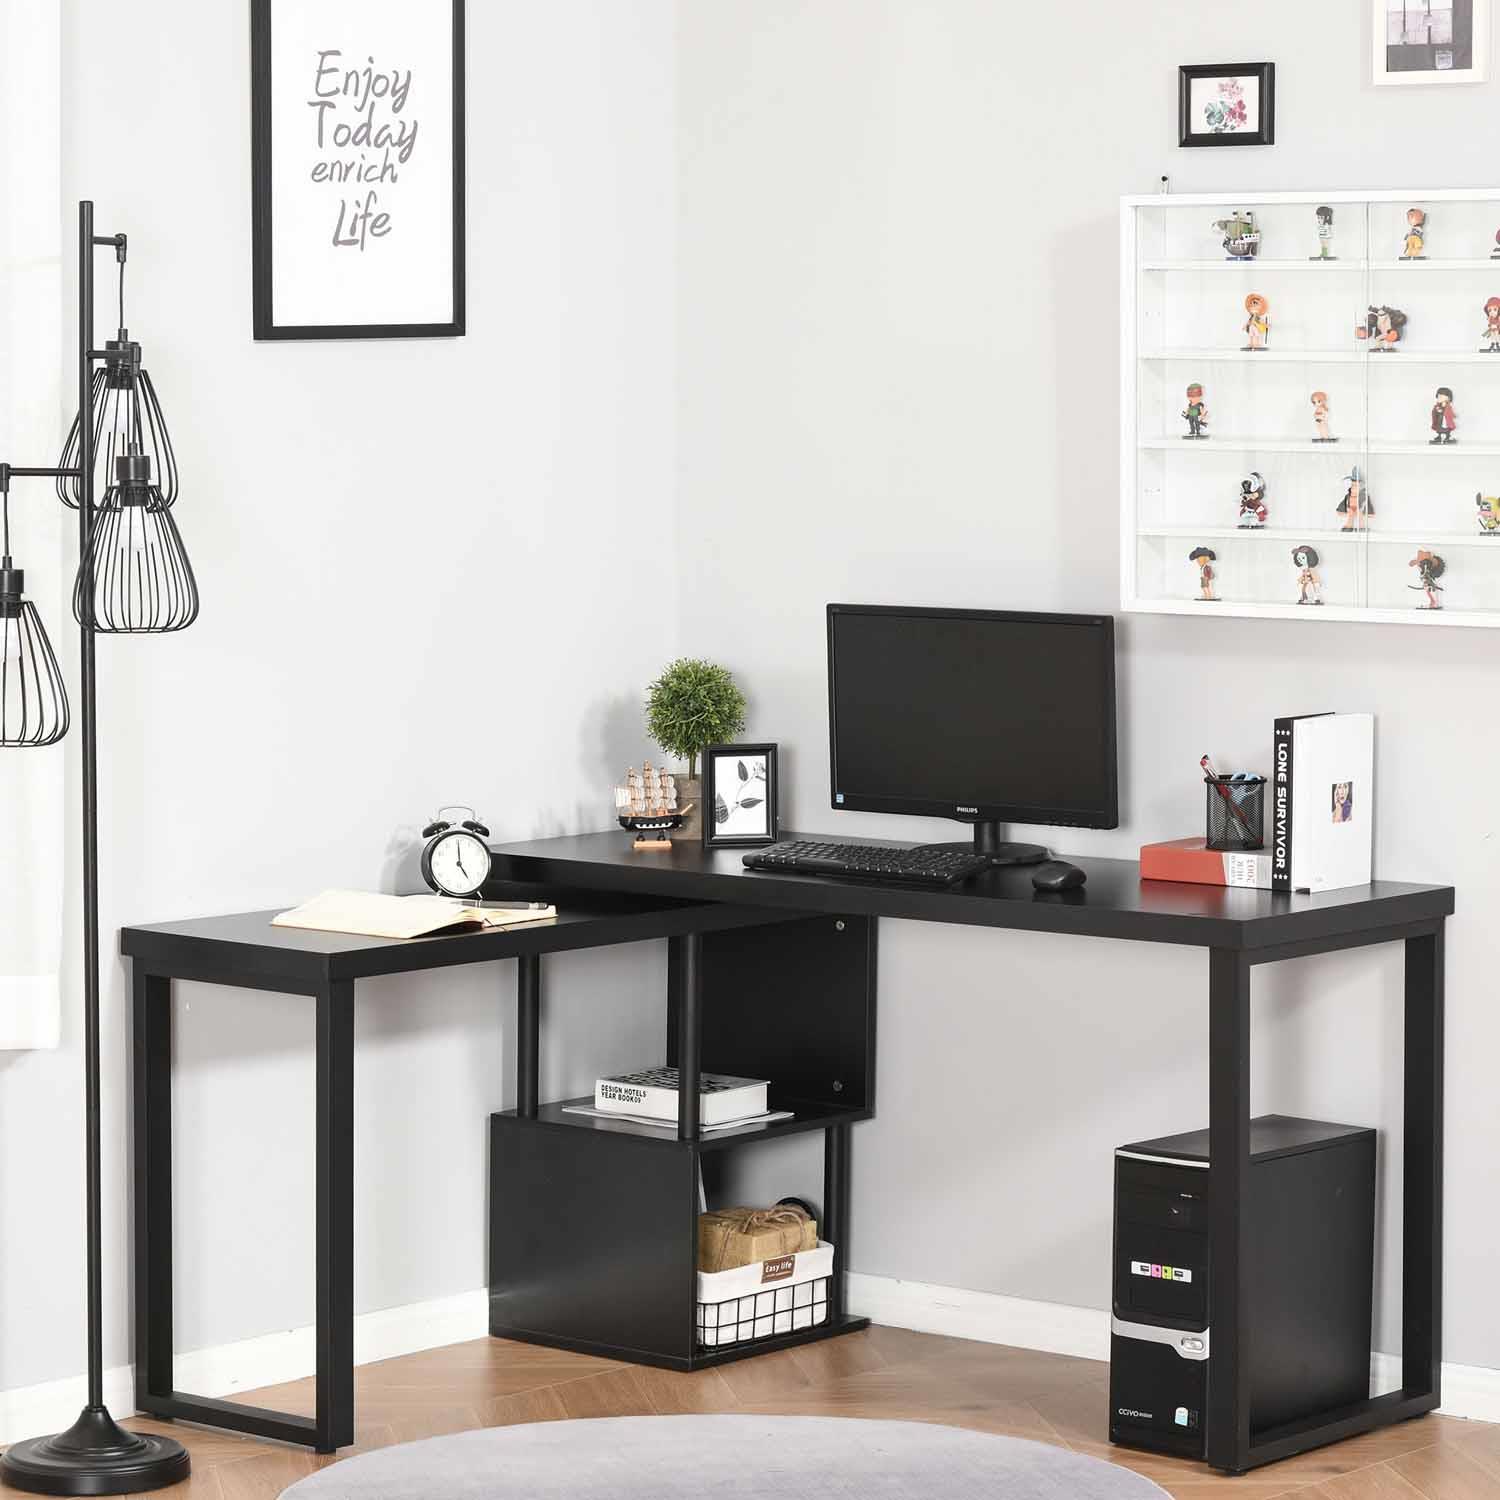 Mesa de Oficina BARTON, 220x55x76 cm, Giratoria, con Estantes, en Metal y Madera color Negro